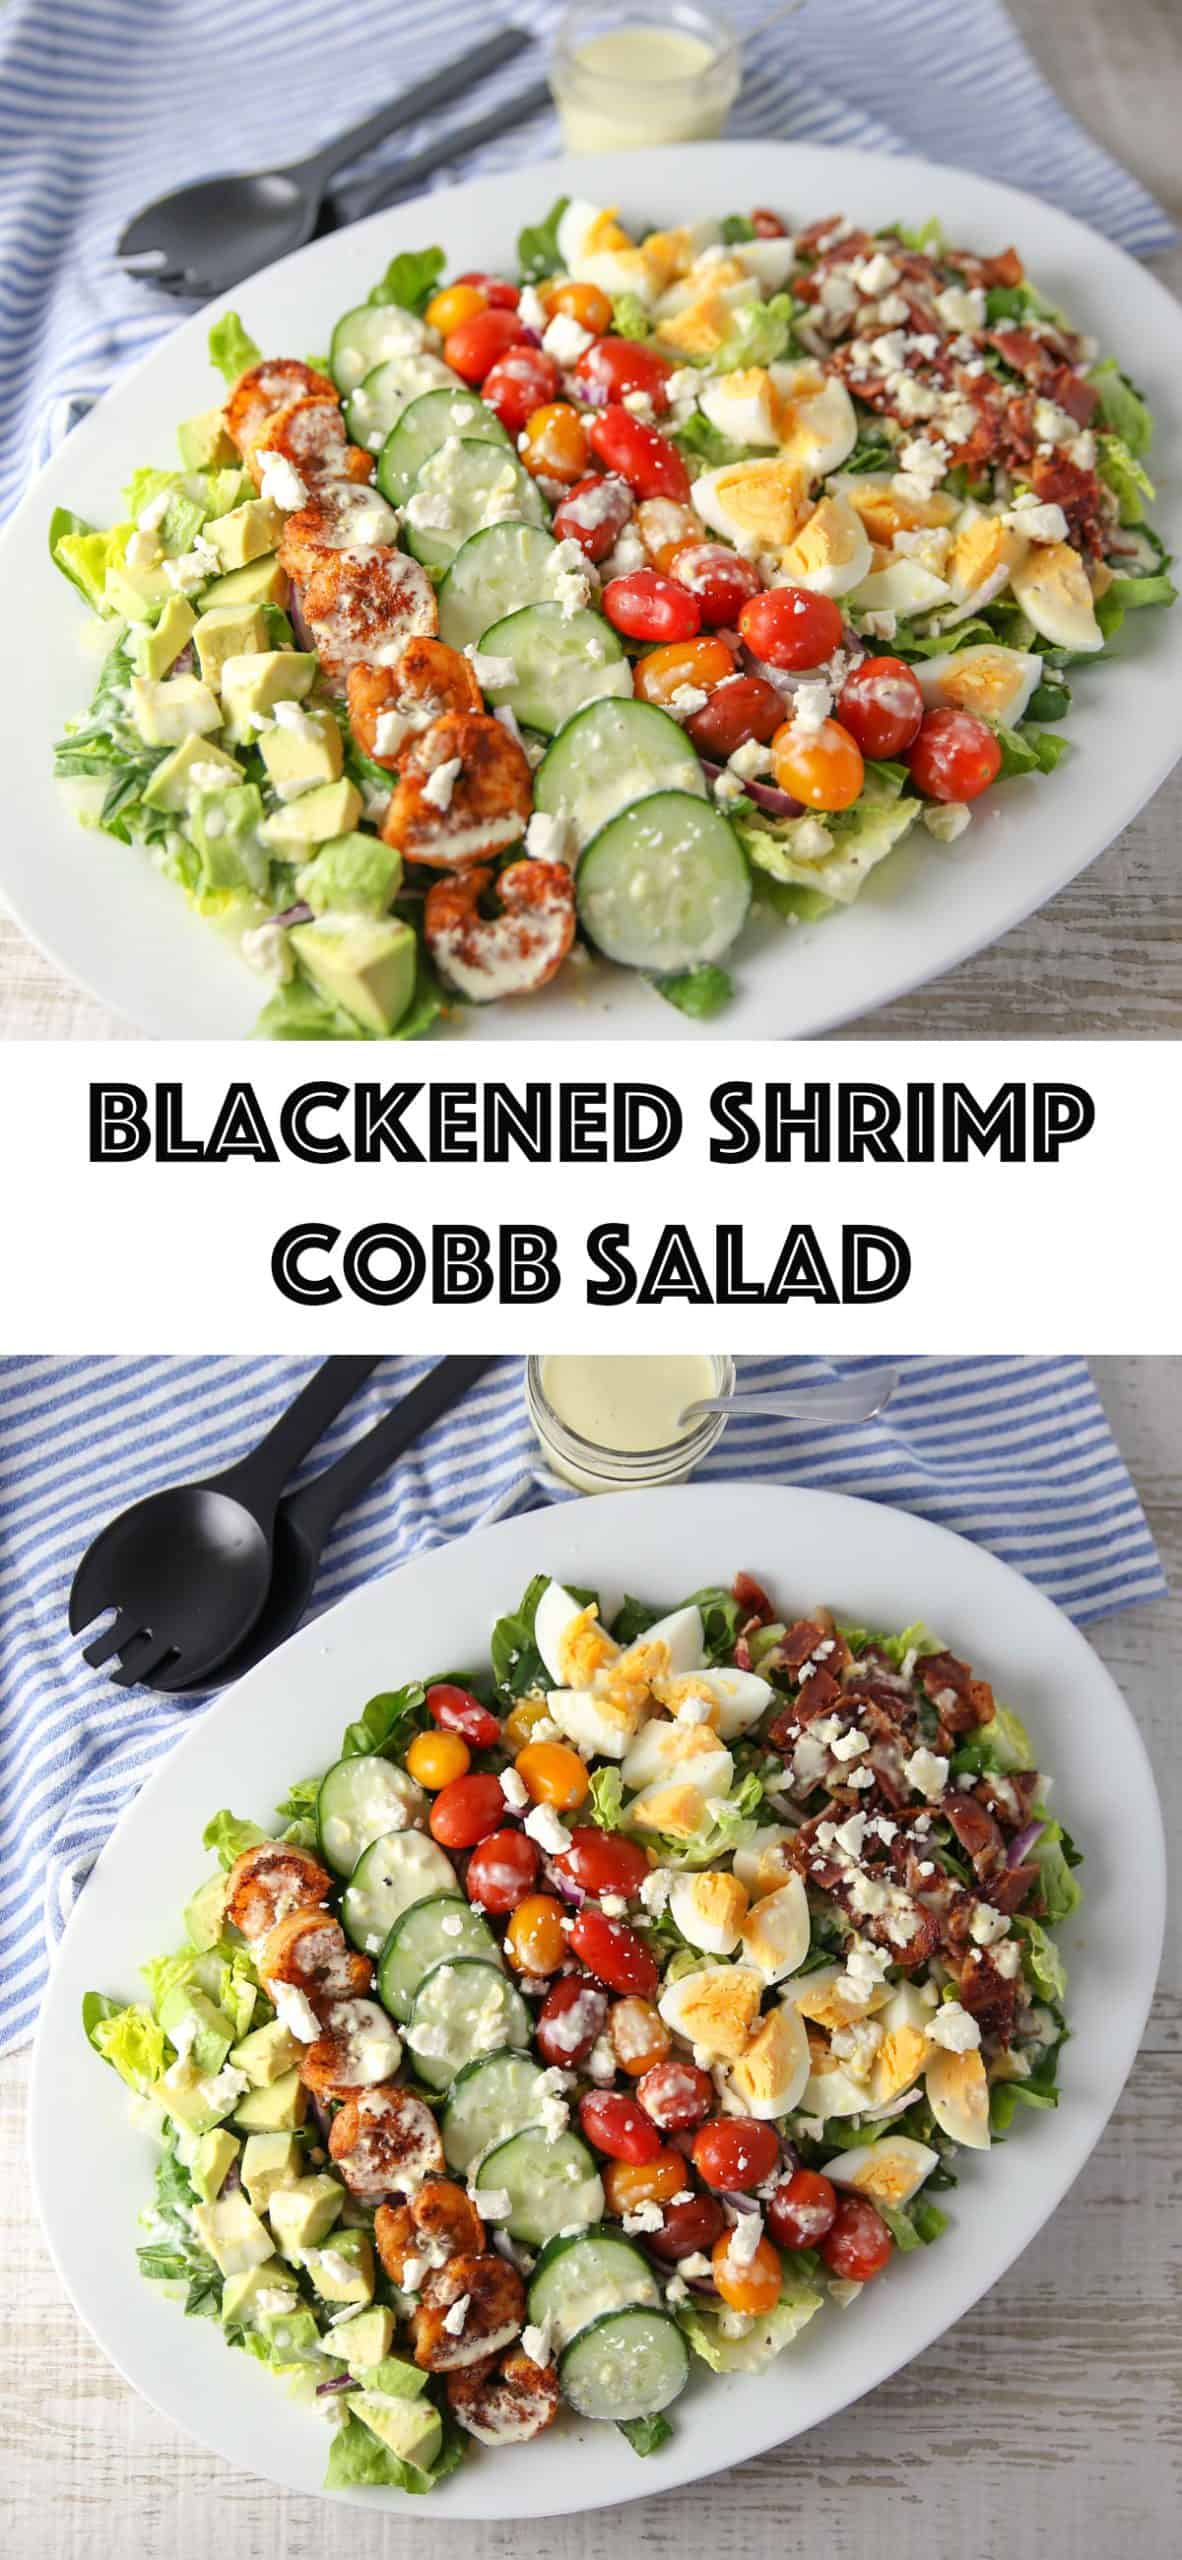 blackened shrimp cobb salad